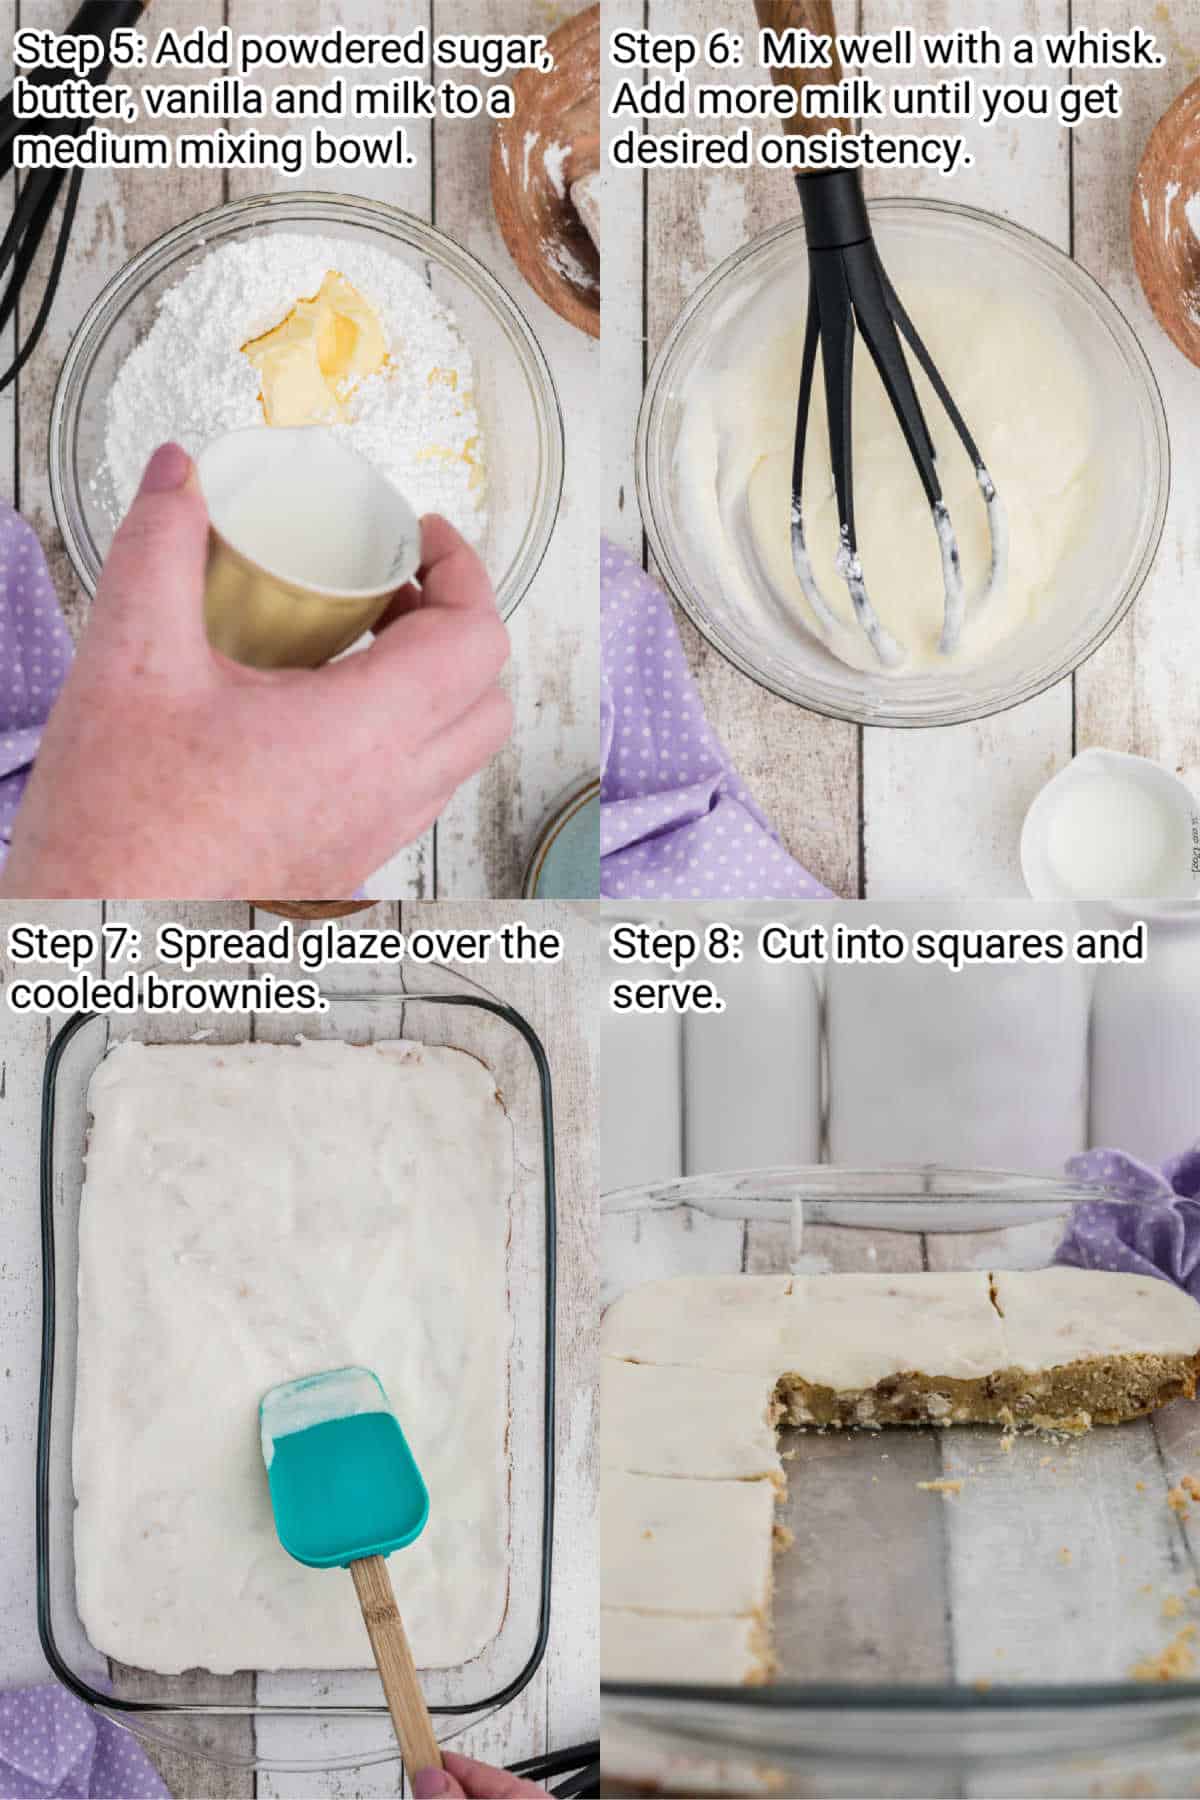 4 images showing steps to take to make vanilla brownies